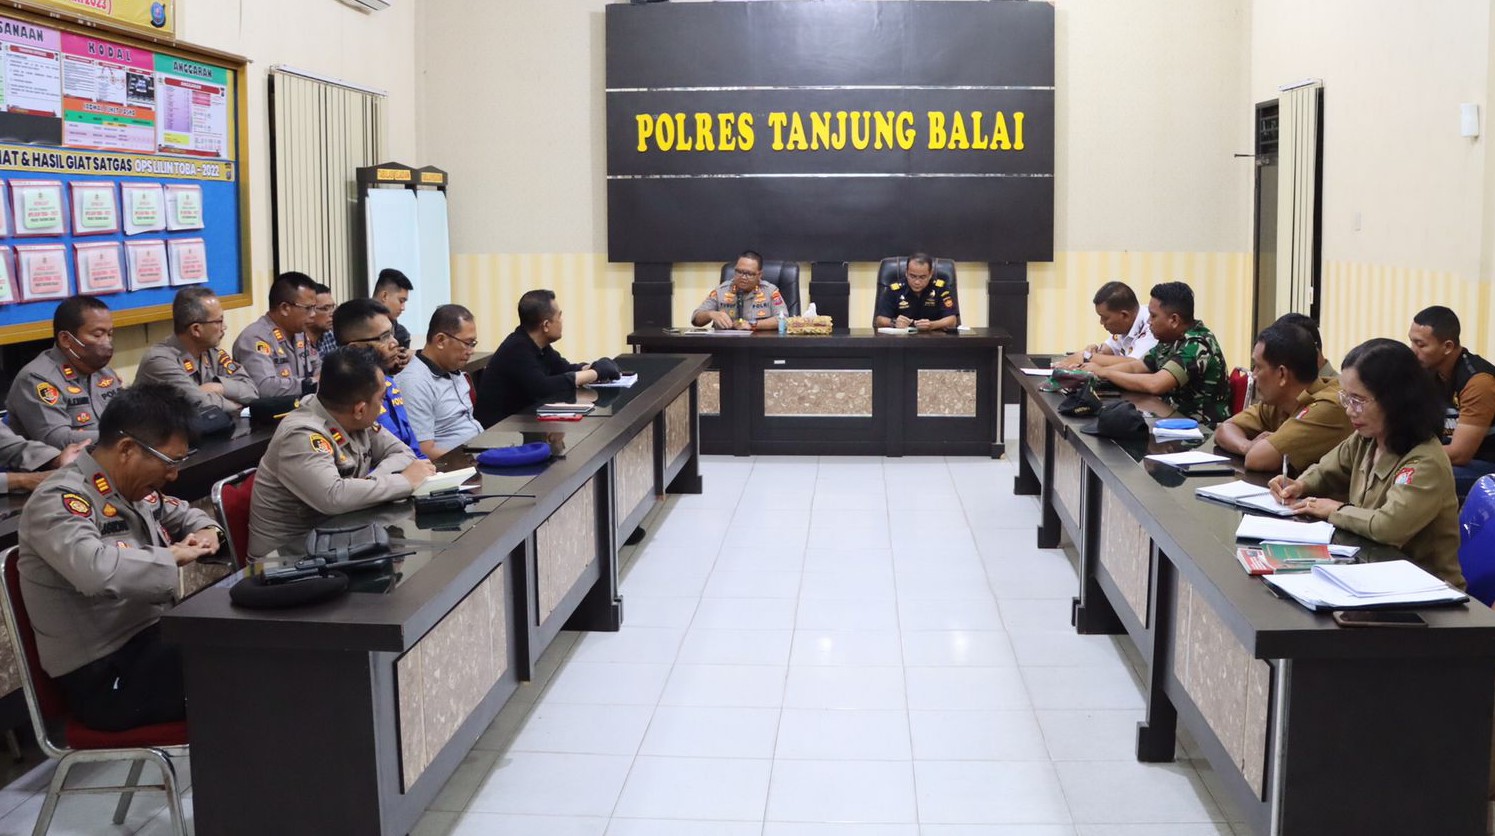 Terkait Paradigma Impor Pakaian Bekas, Kapolres Tanjung Balai Gelar Rapat Koordinasi Bersama Instansi Terkait